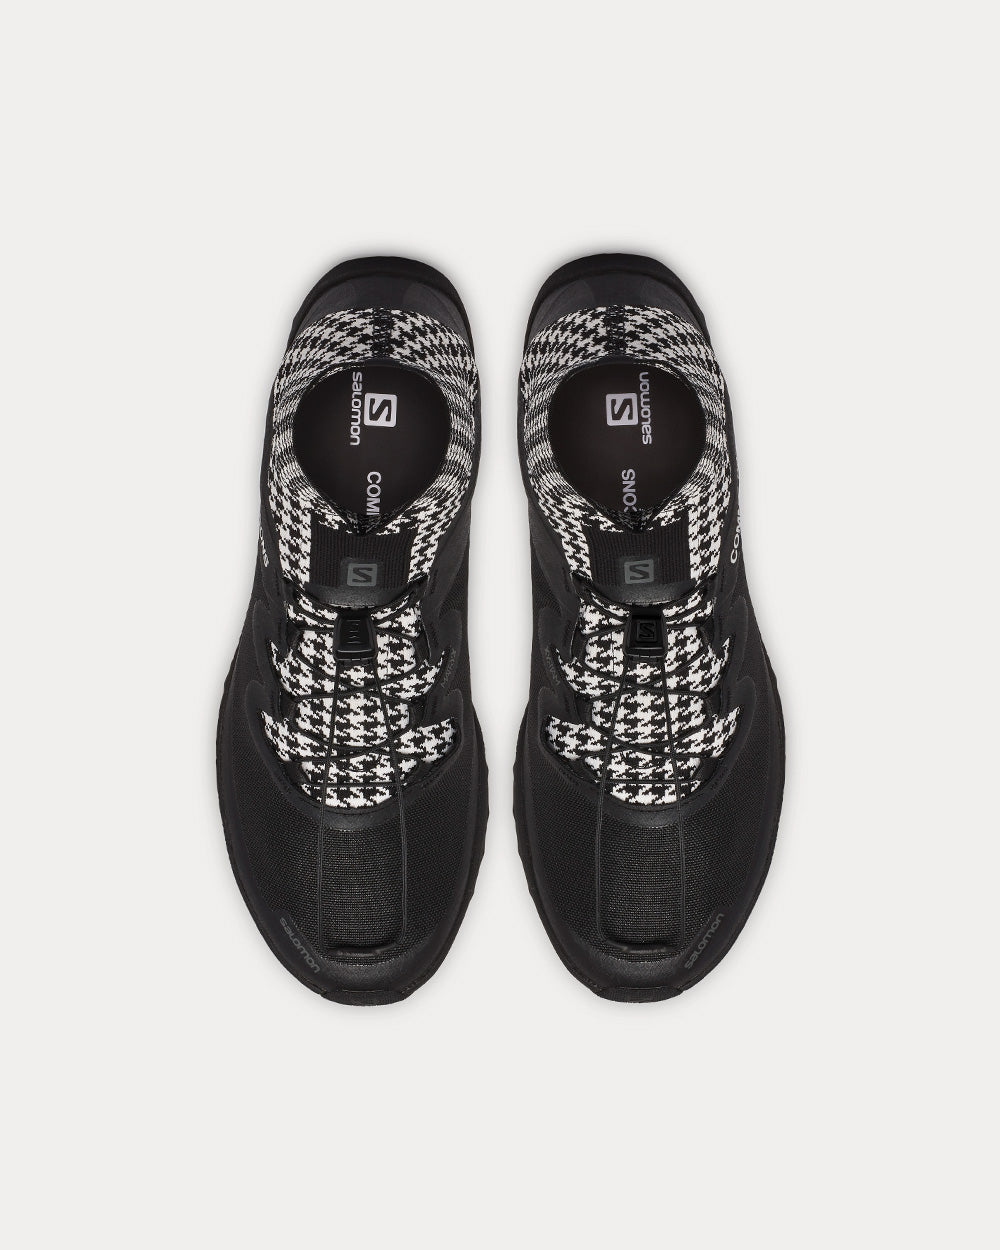 Salomon x Comme des Garçons - Cross Mixed Black / White High Top Sneakers